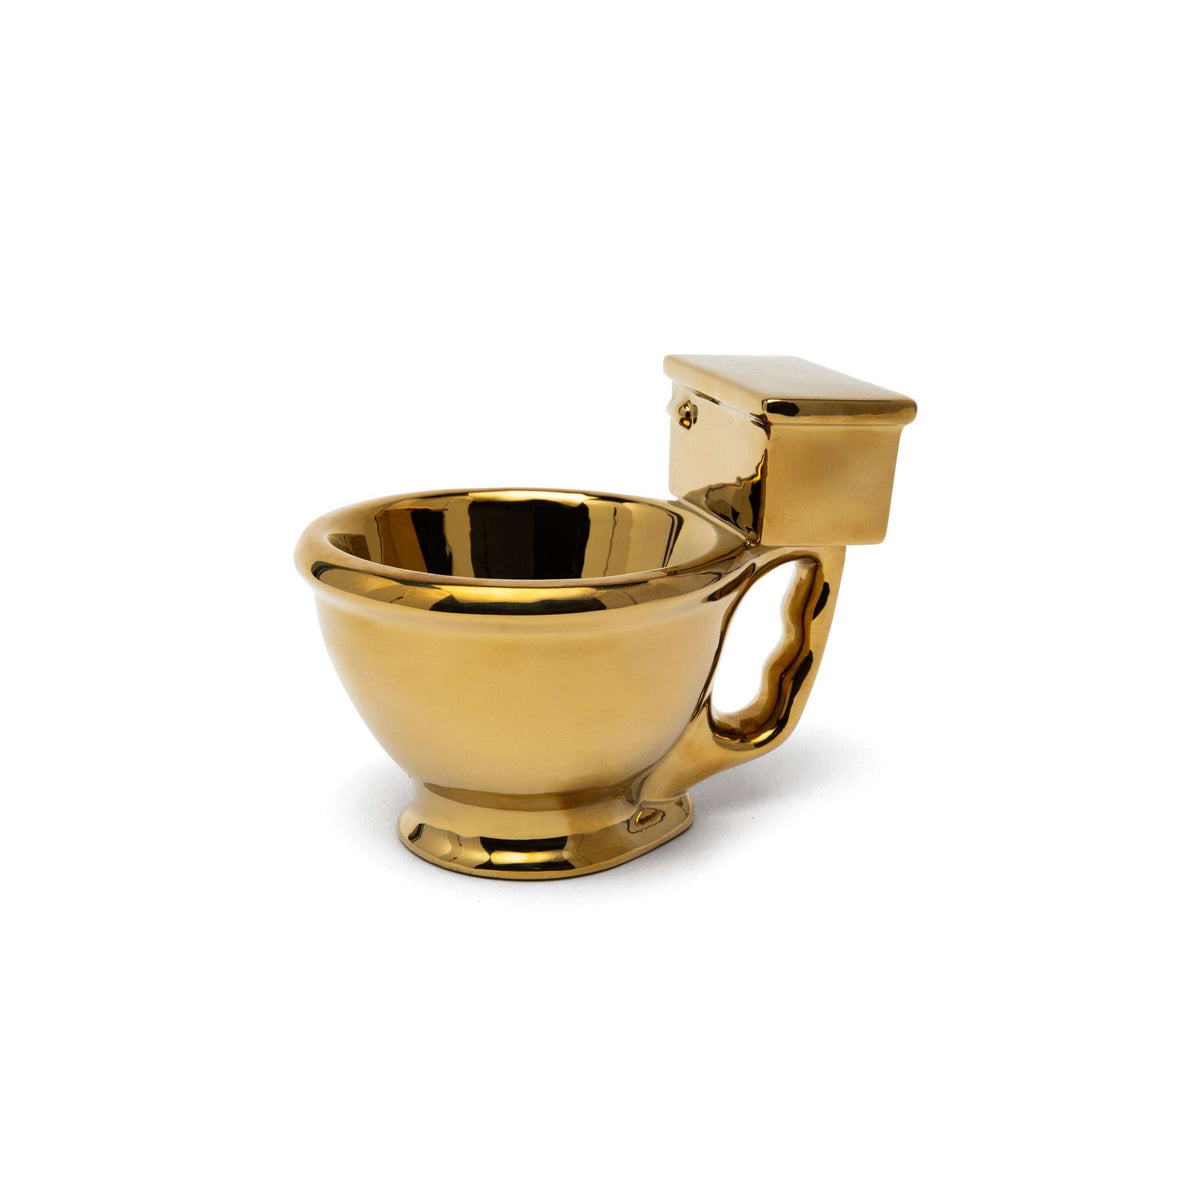 Golden Toilet Coffee Mug